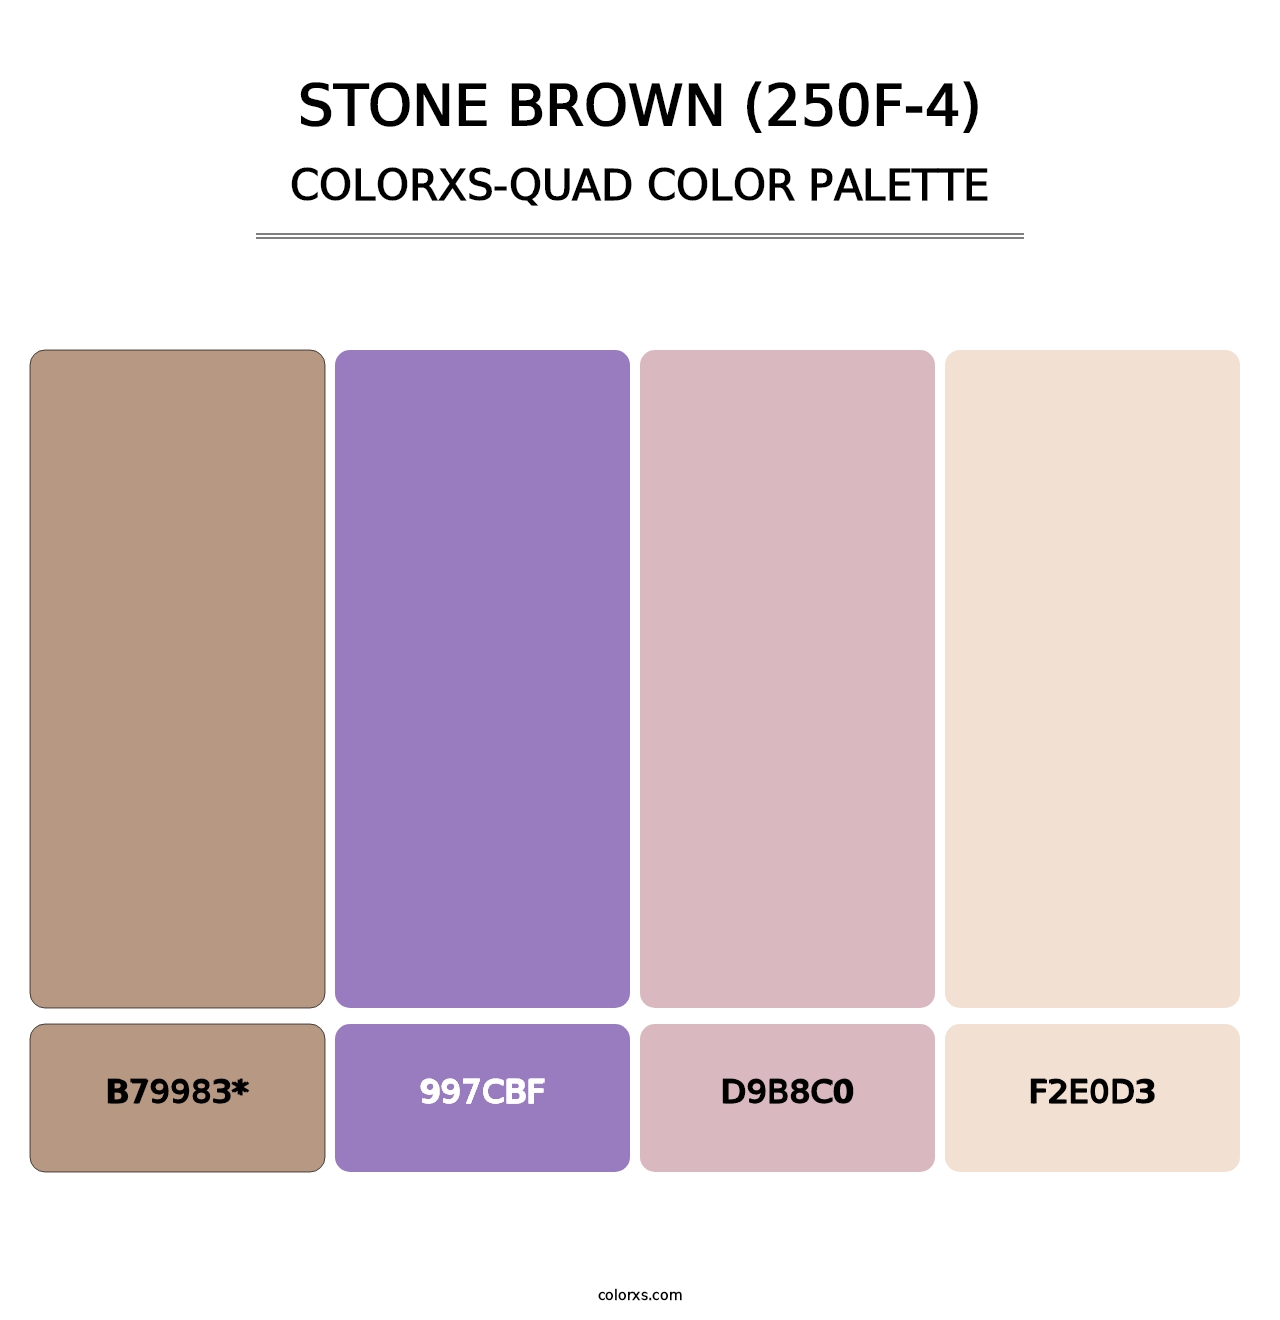 Stone Brown (250F-4) - Colorxs Quad Palette